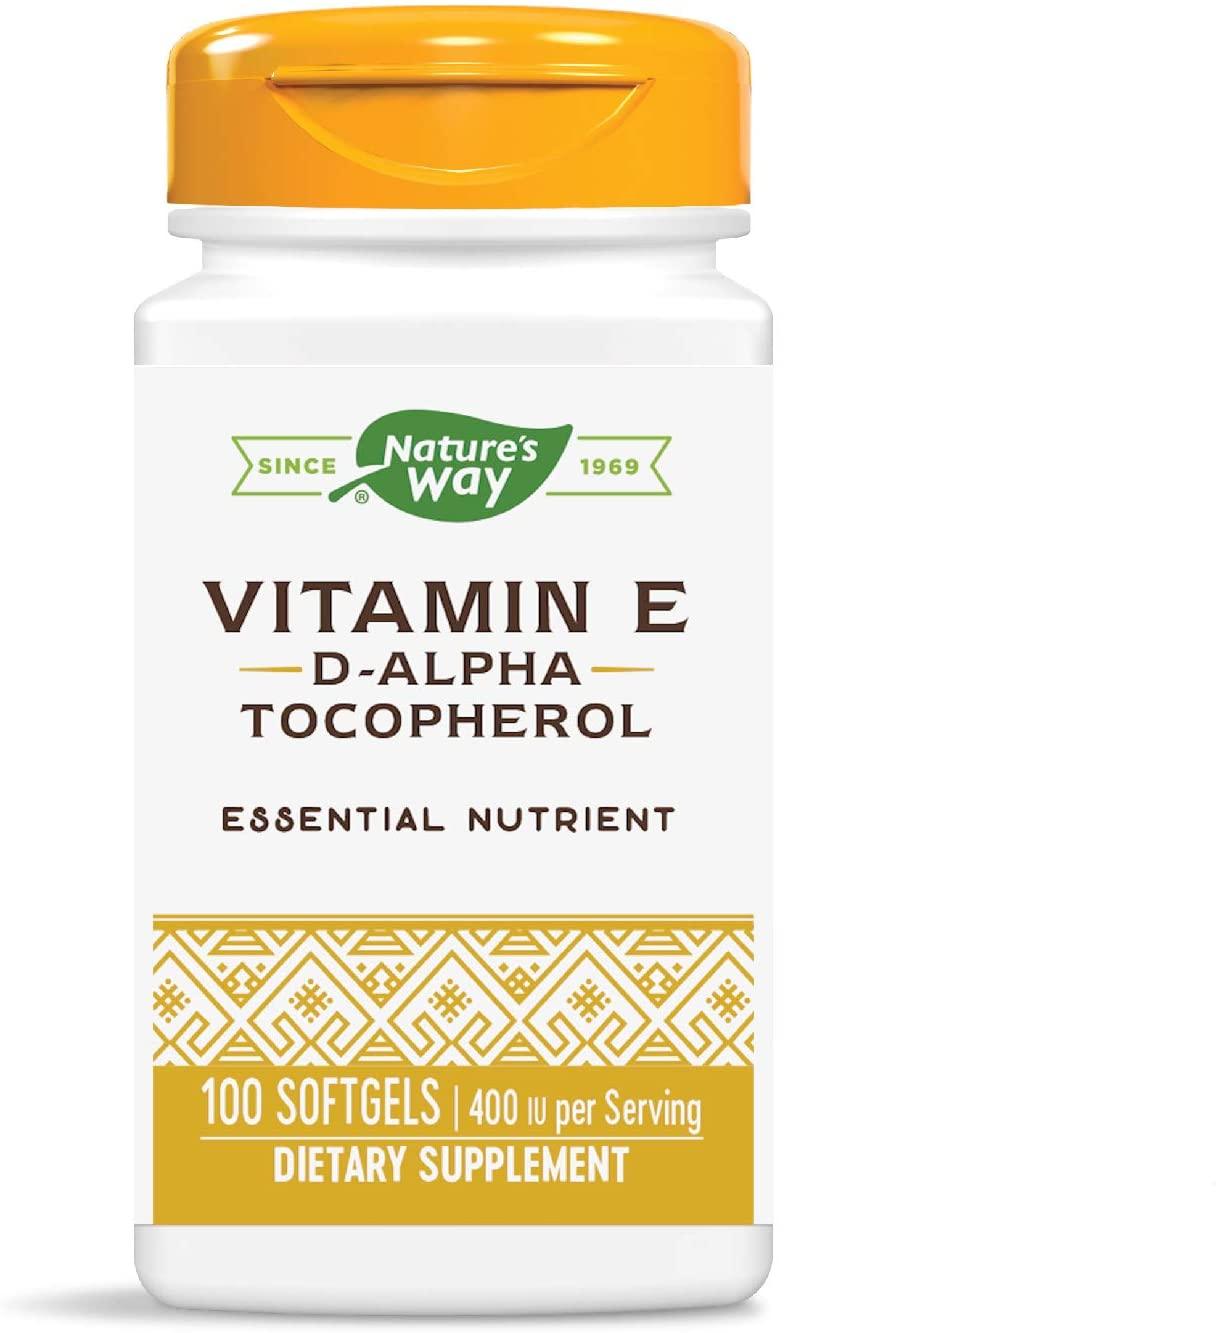 Nature's Way Vitamina E 400 IU, 100 Softgels - NutriVita